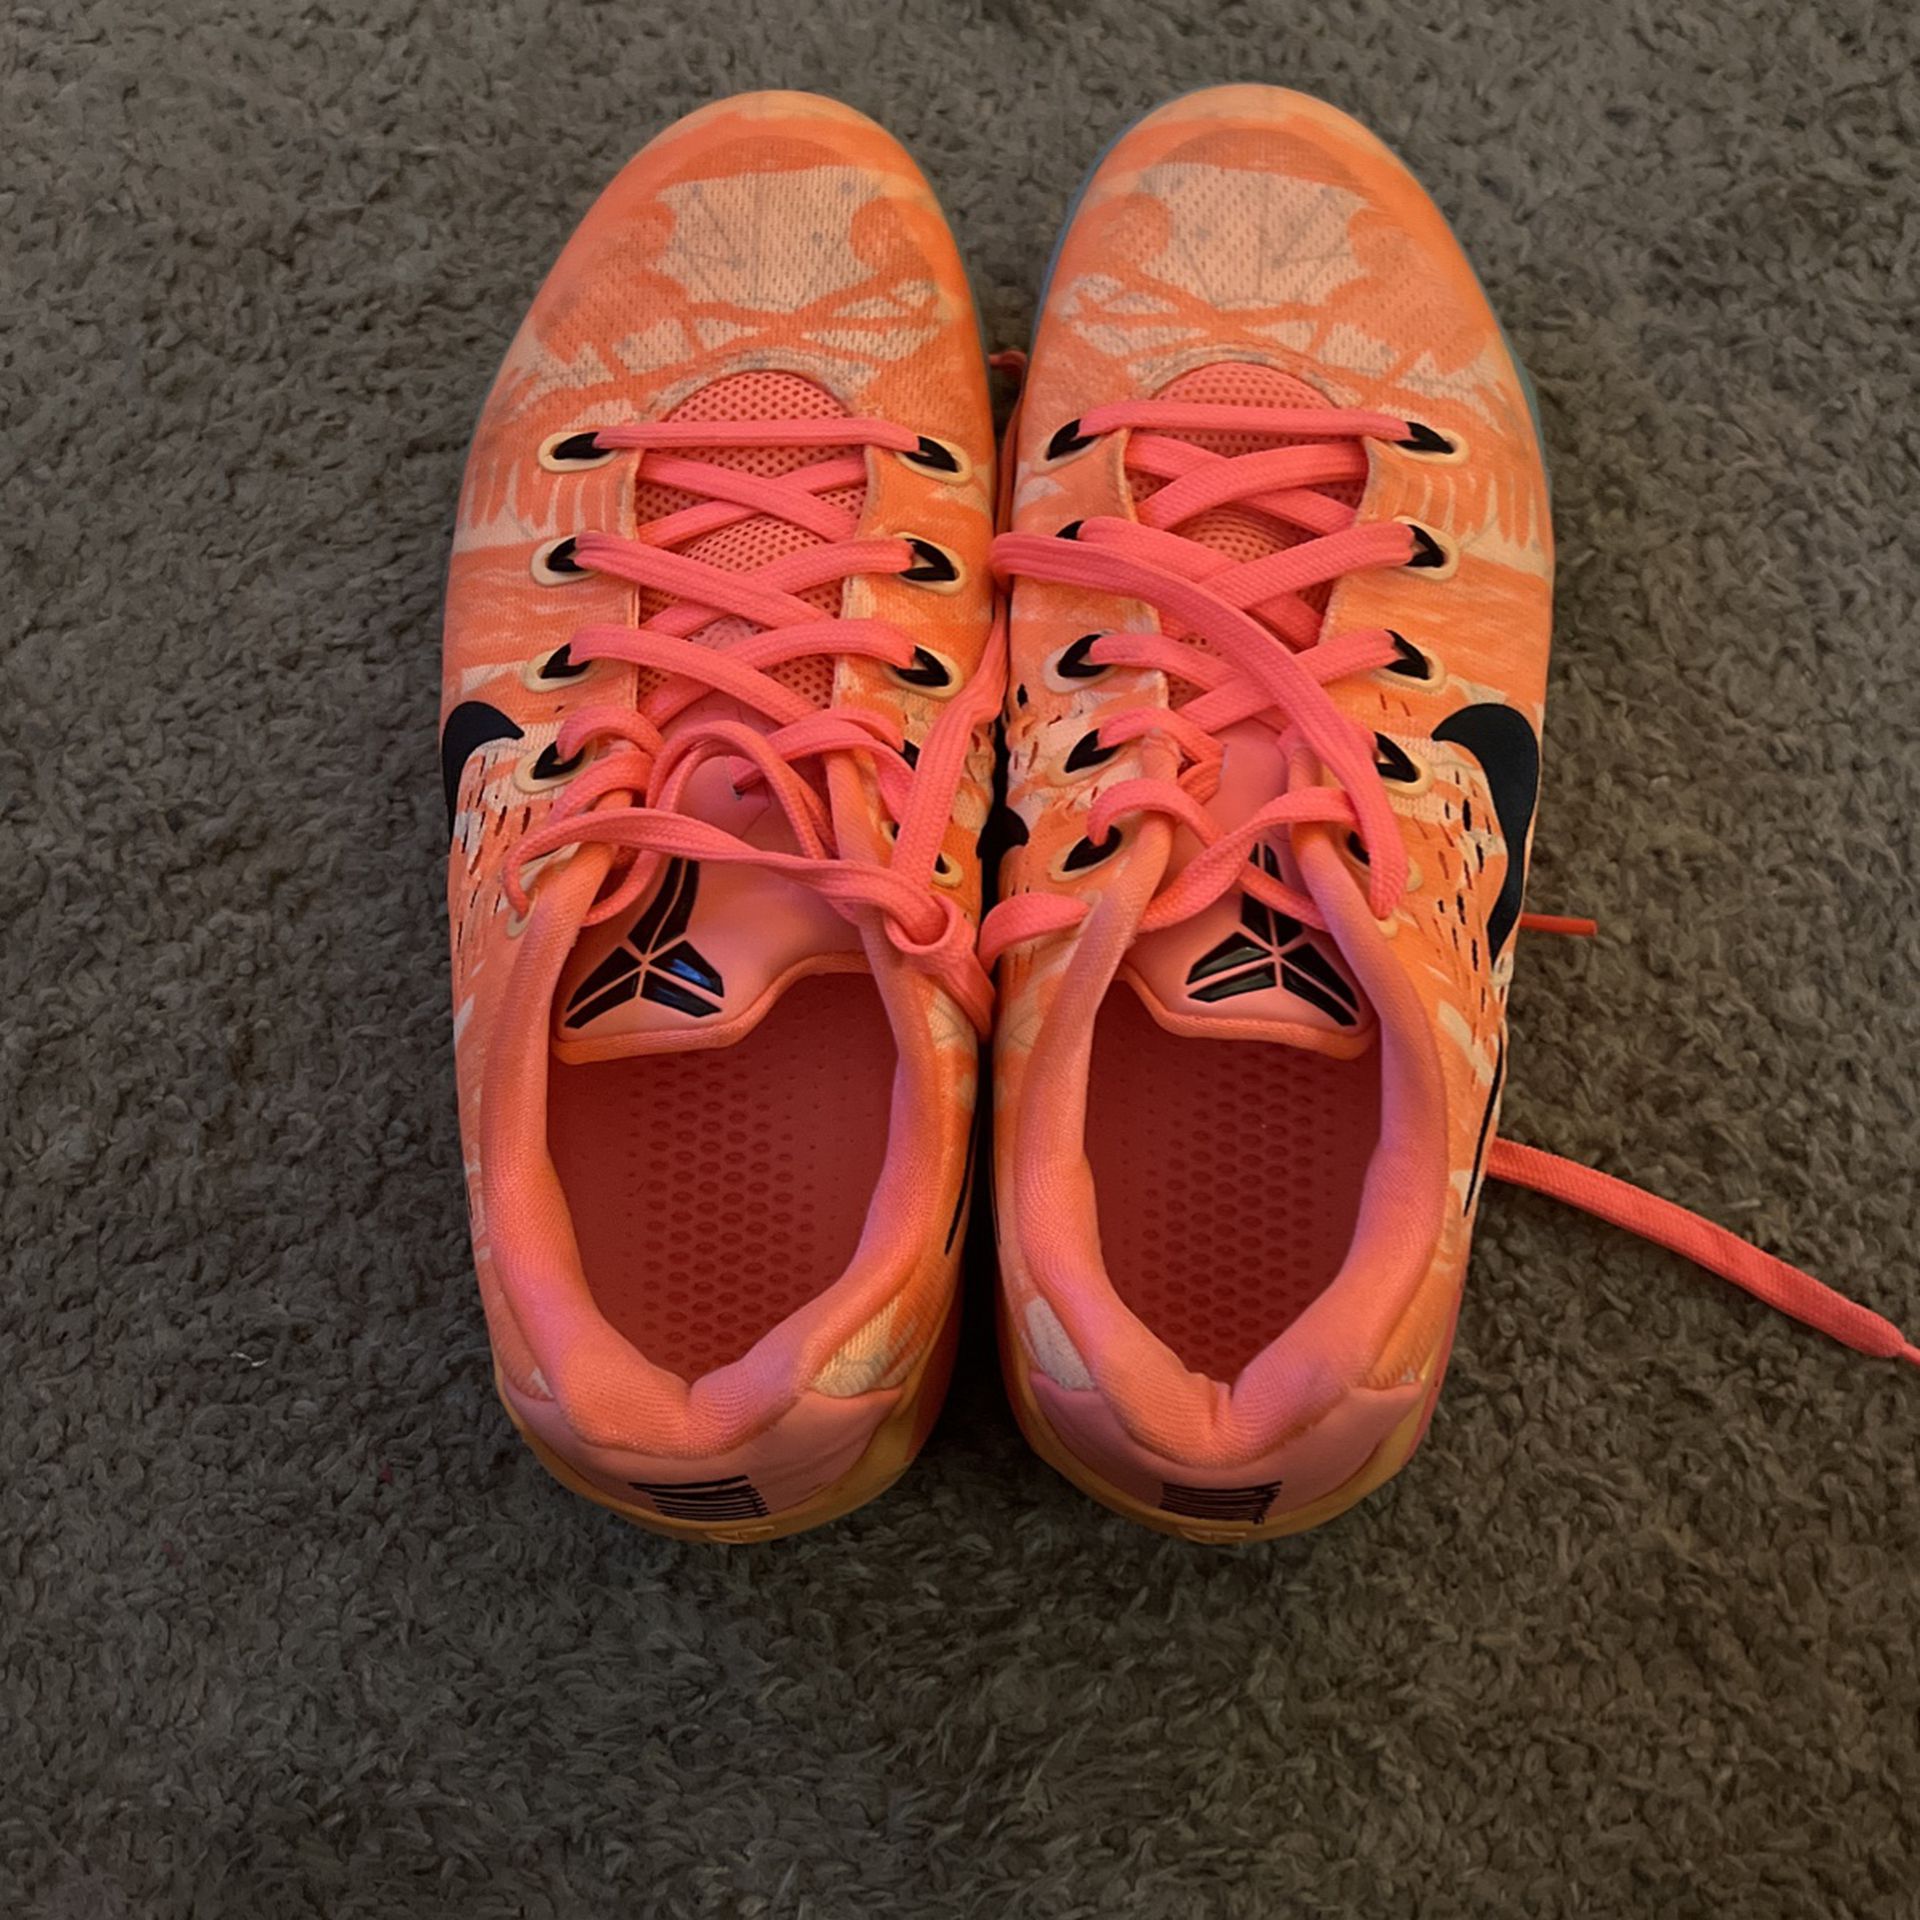 Nike Kobe 9 (Bright Mango) Size 8